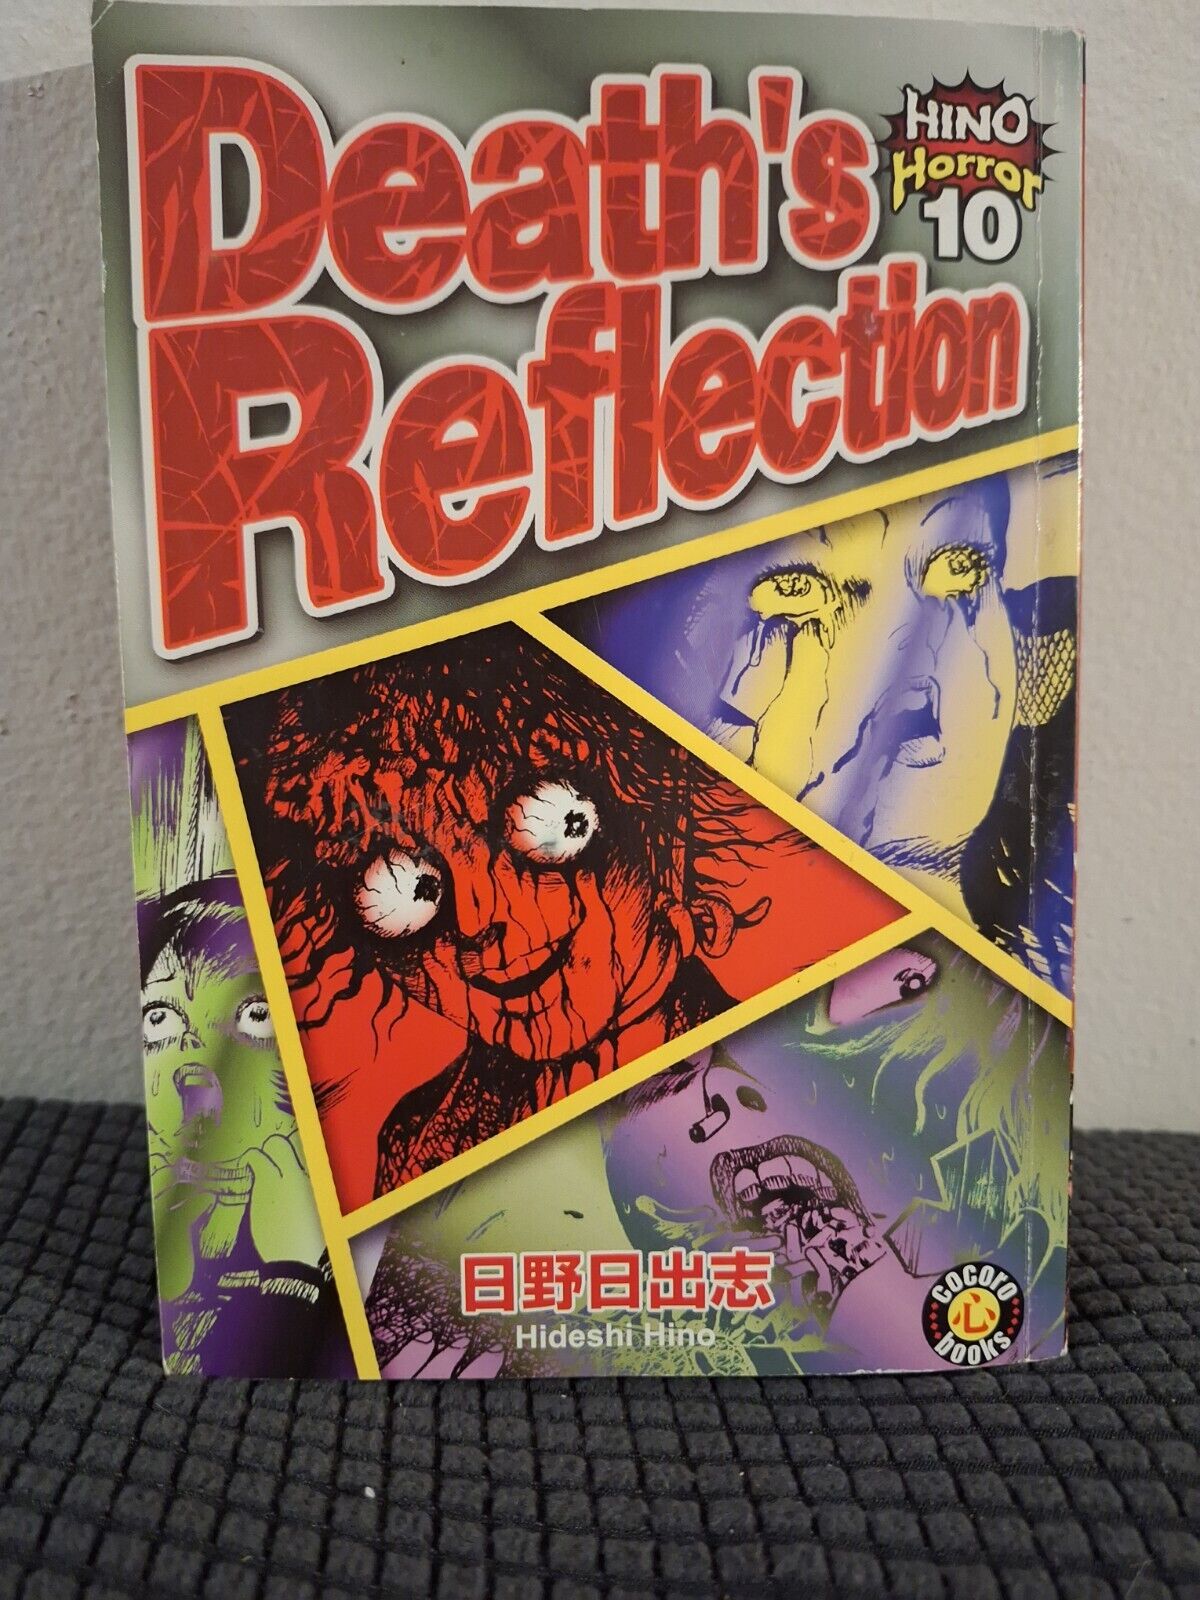 Hino Horror #10 Death's Reflection by Hideshi Hino Paperback 2004 Graphic Novel